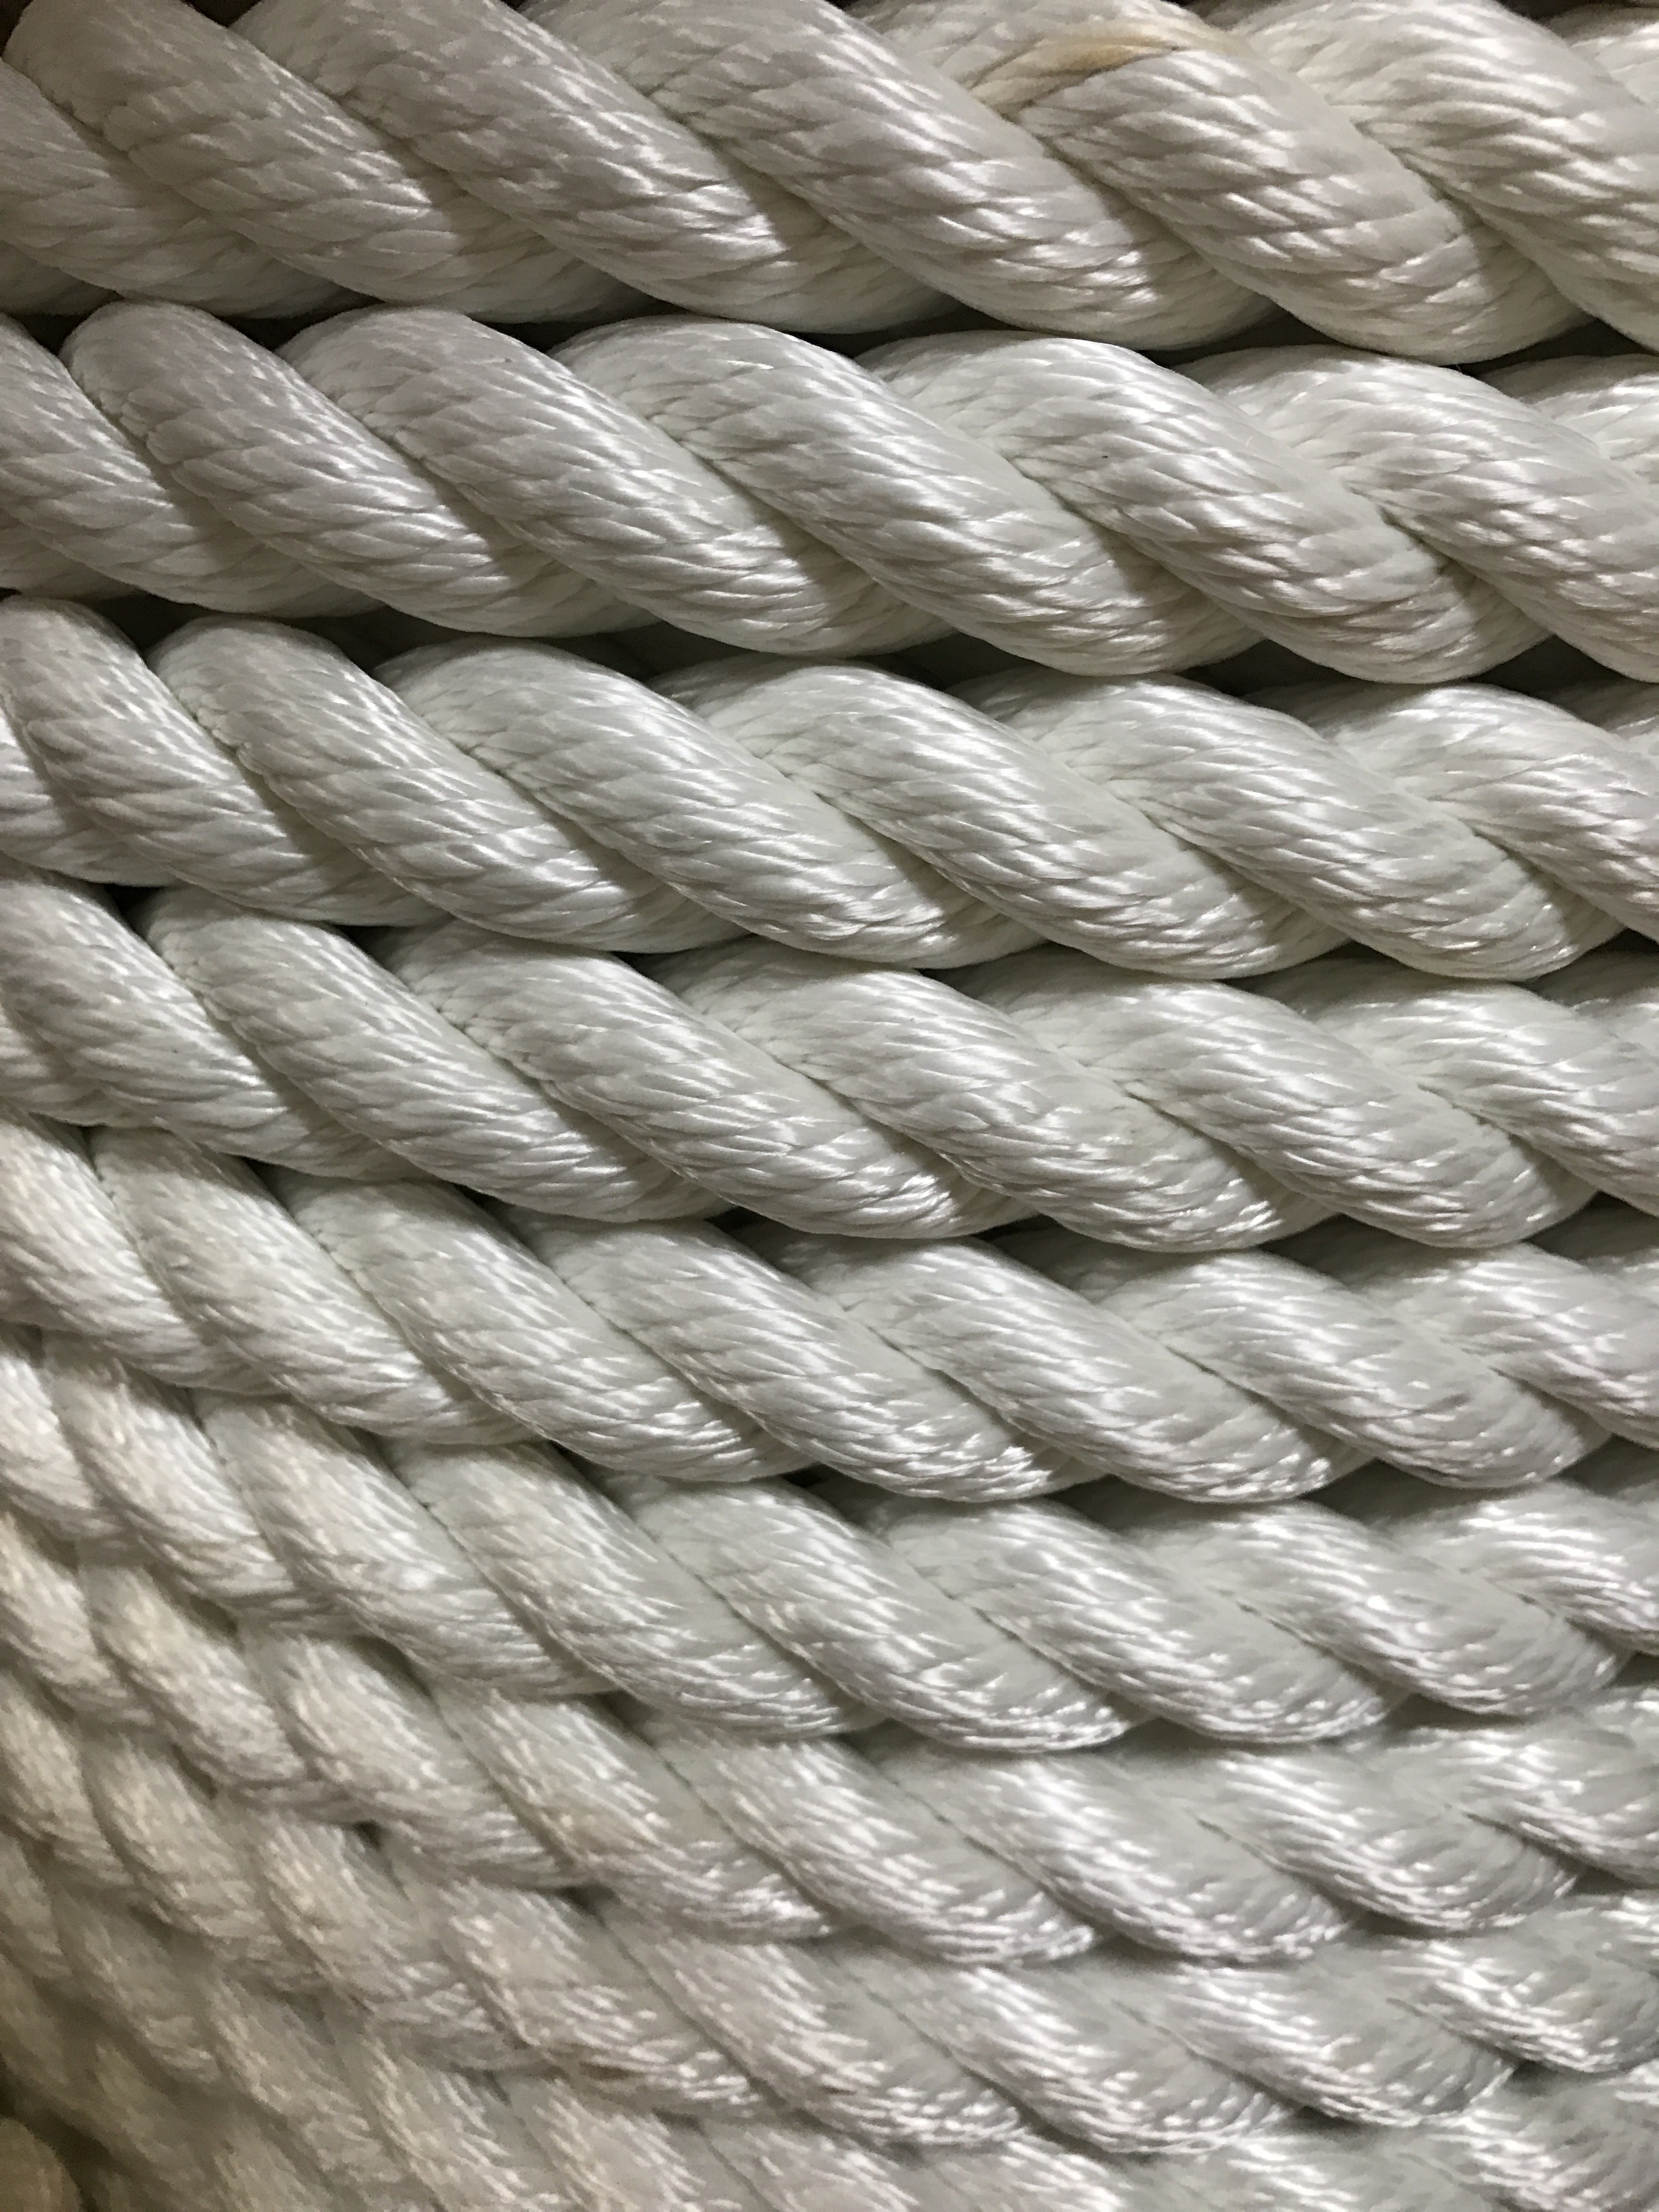 Solid Braid Multifilament Polypropylene Rope